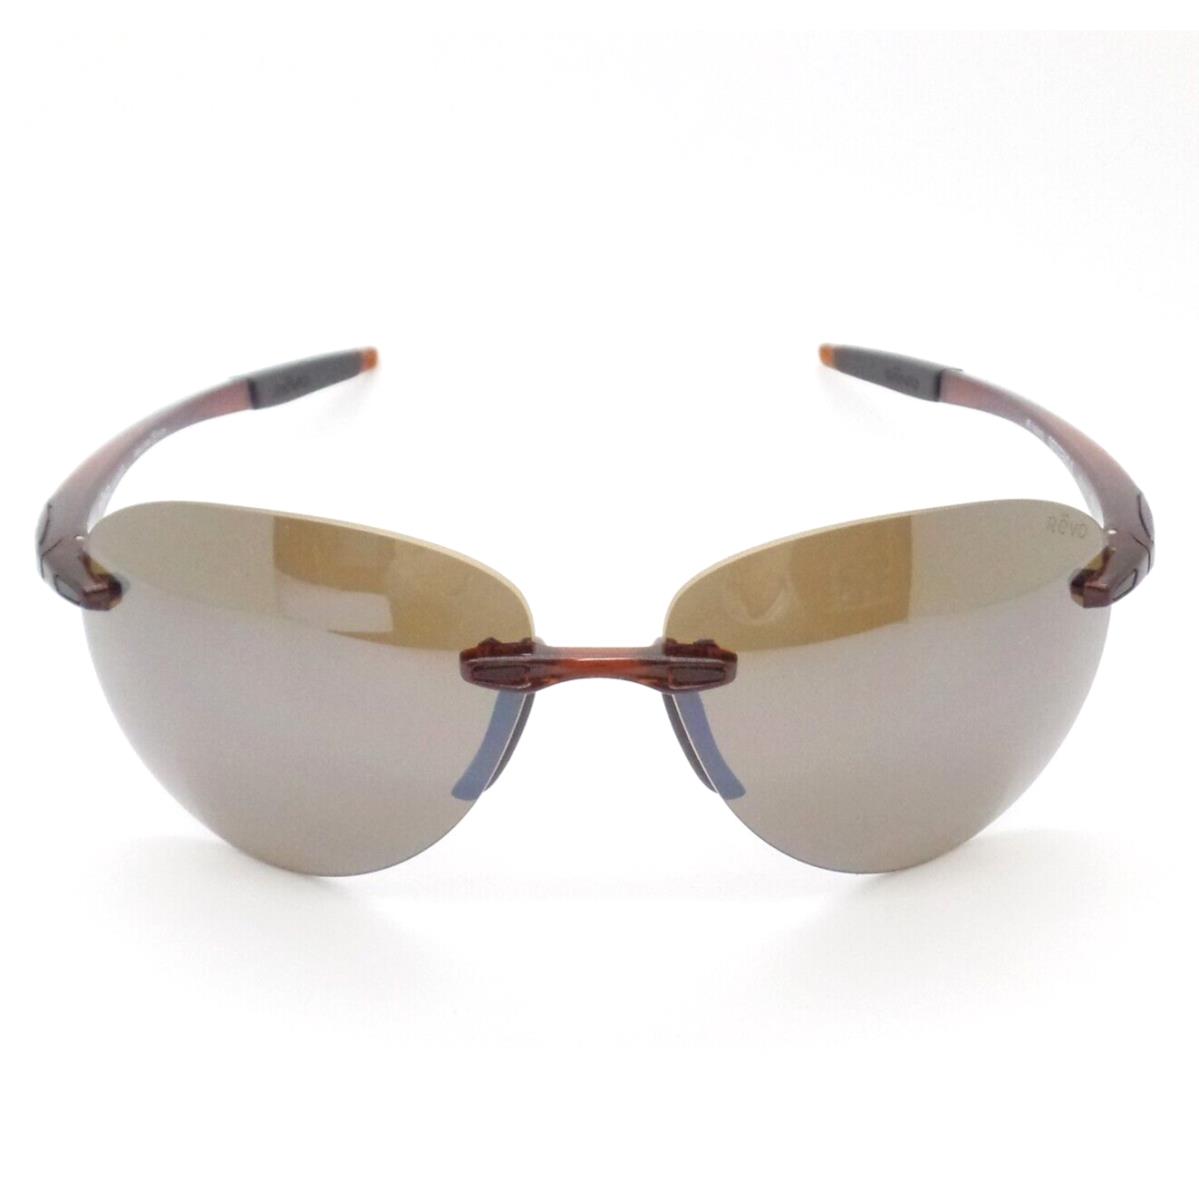 Revo sunglasses  - Brown Frame, Terra Brown Lens 0